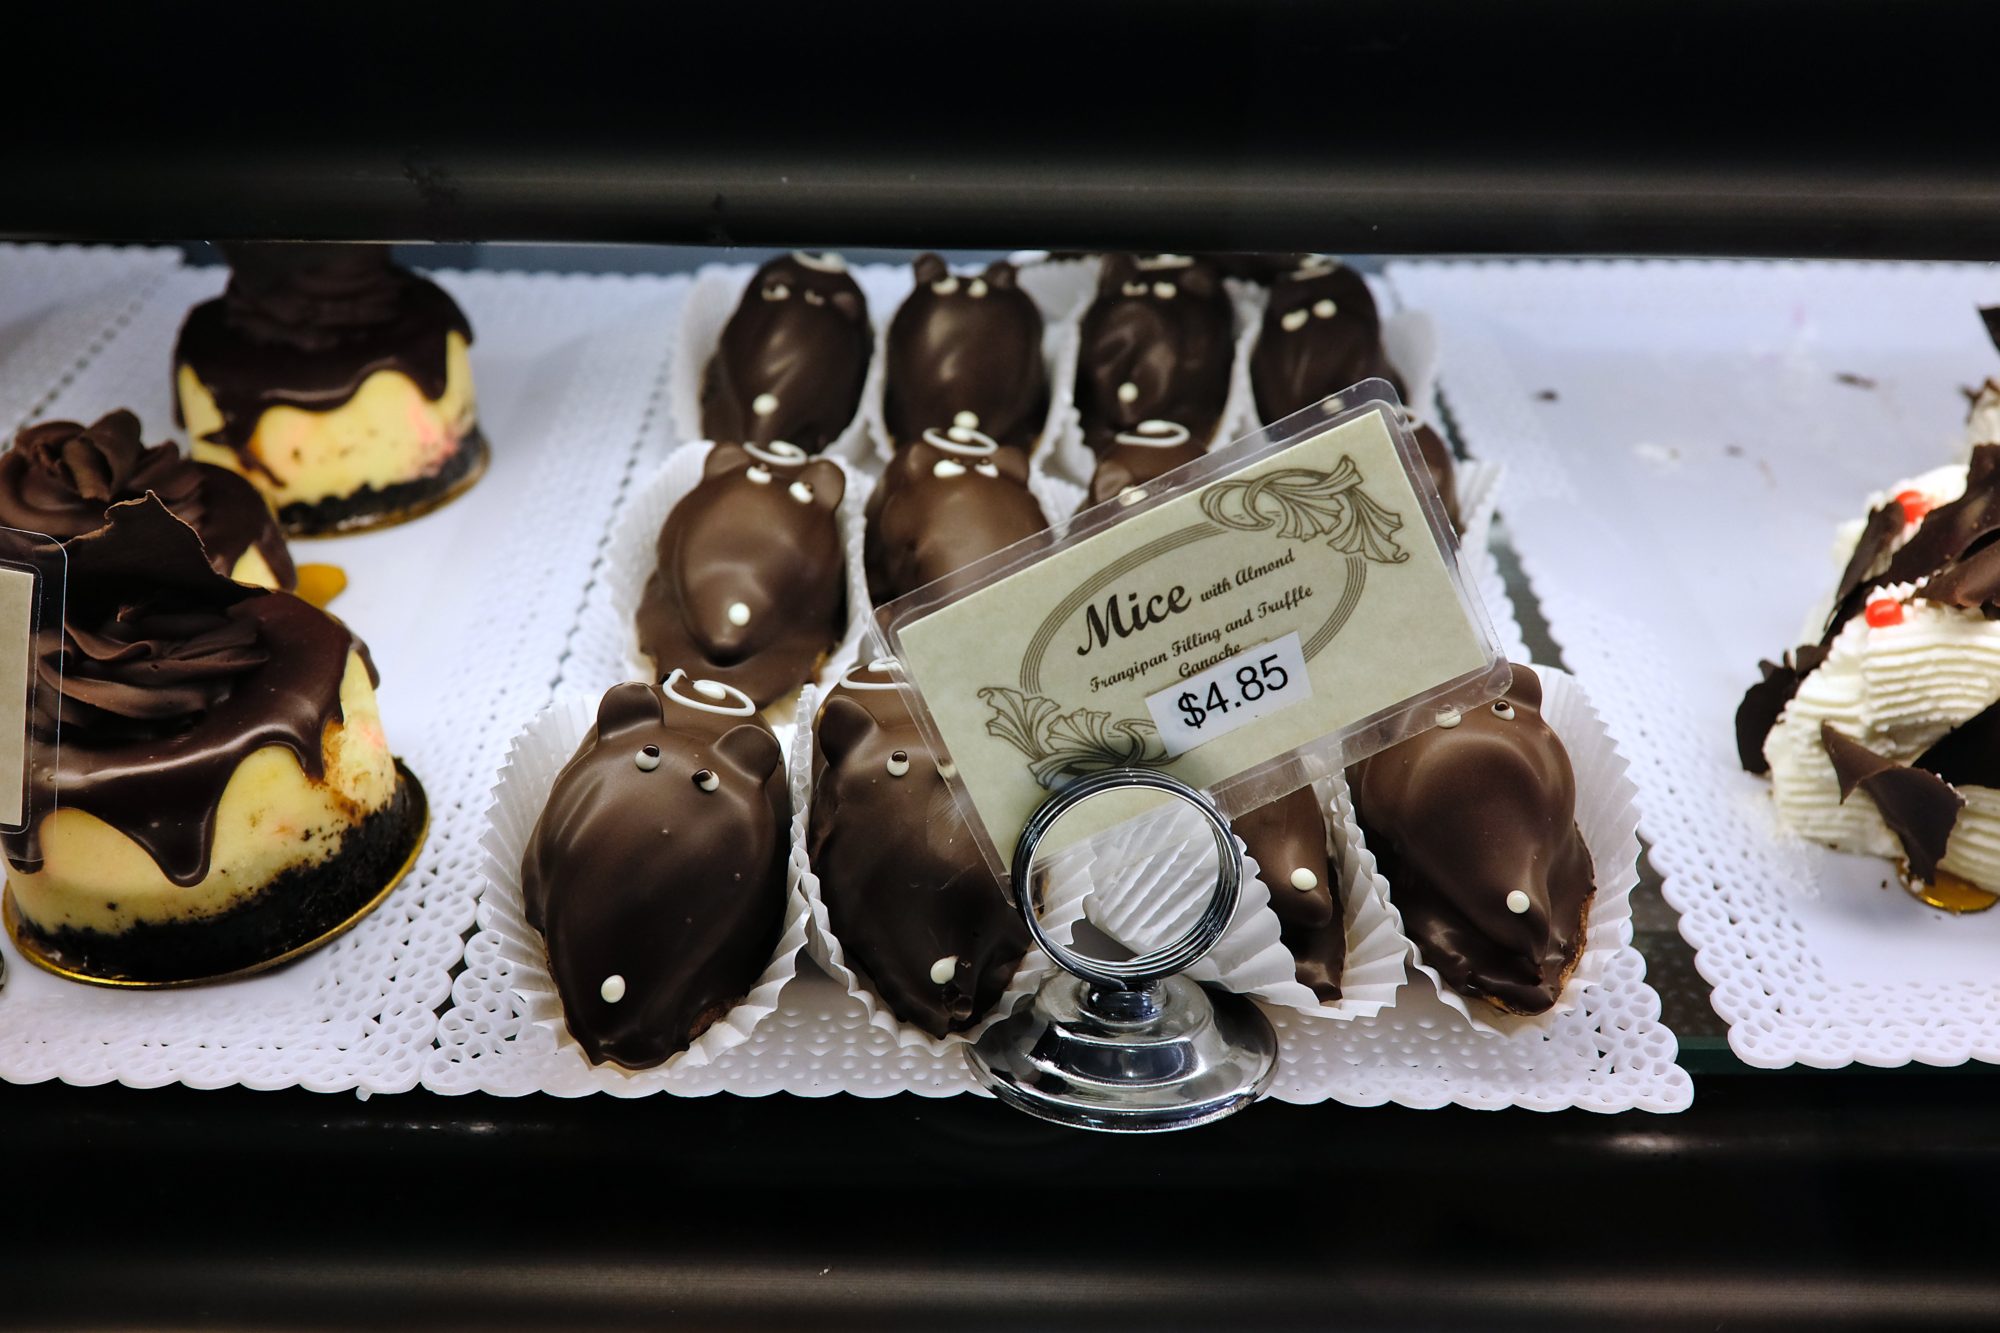 Display of chocolate "mice" at Chocolatier Barrucand